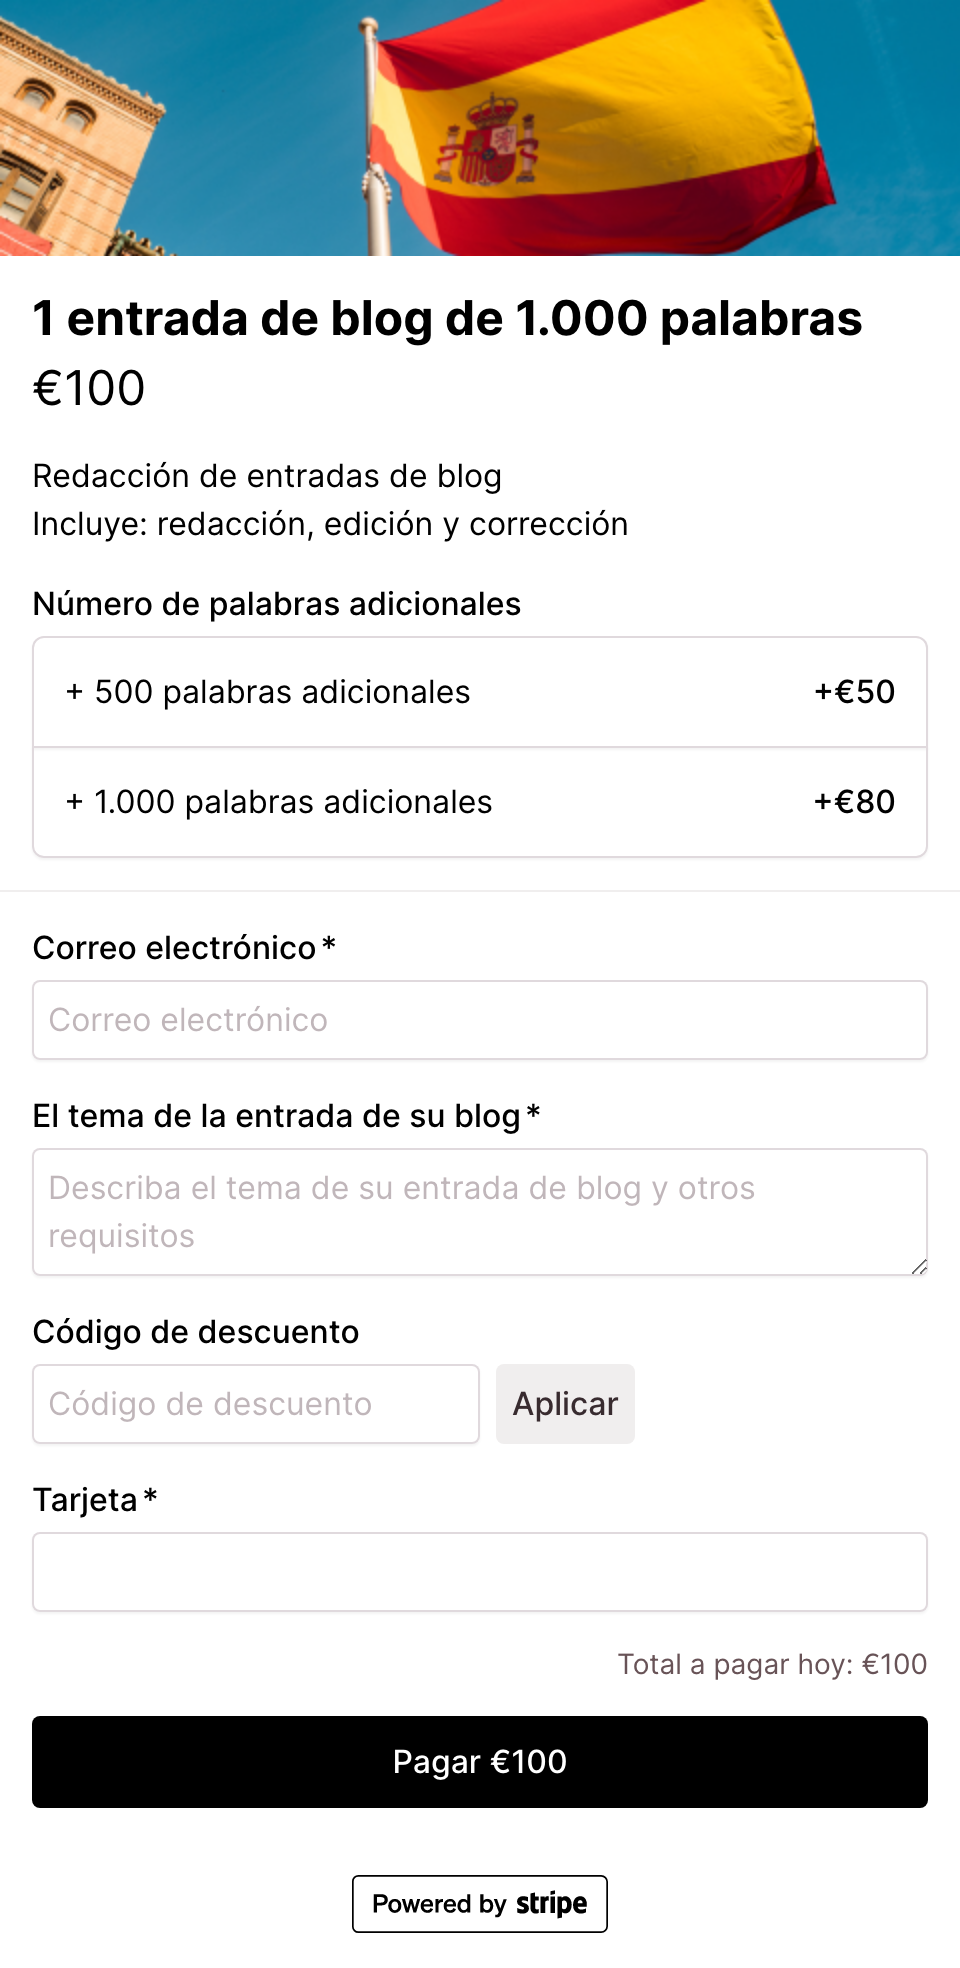 Spanish translated checkout form